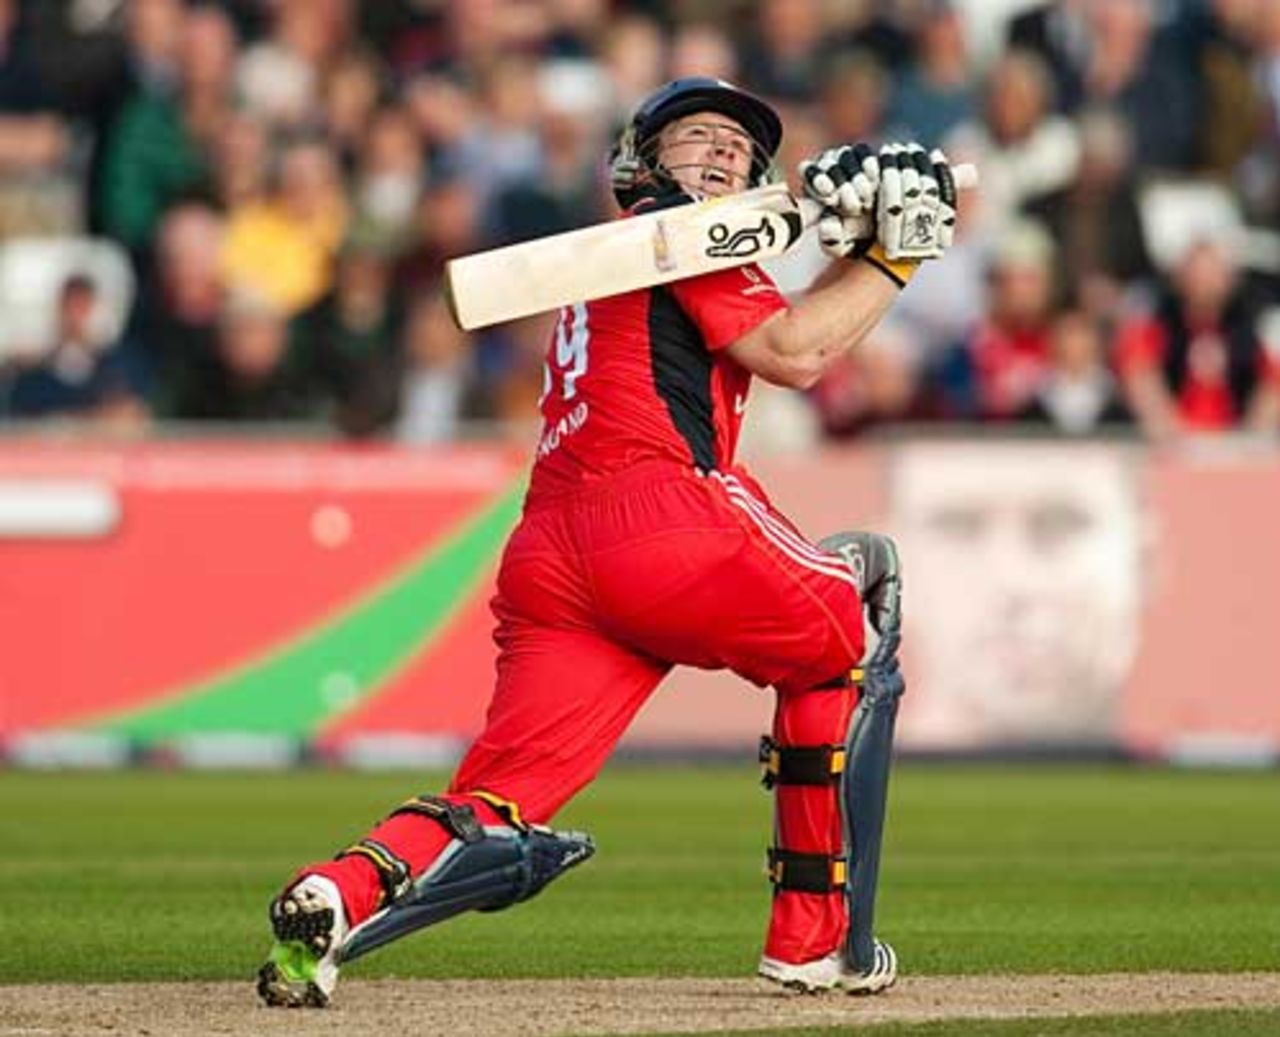 Eoin Morgan swings away a six during his 58 off 41 balls, England v Australia, 5th ODI, Trent Bridge, September 15, 2009